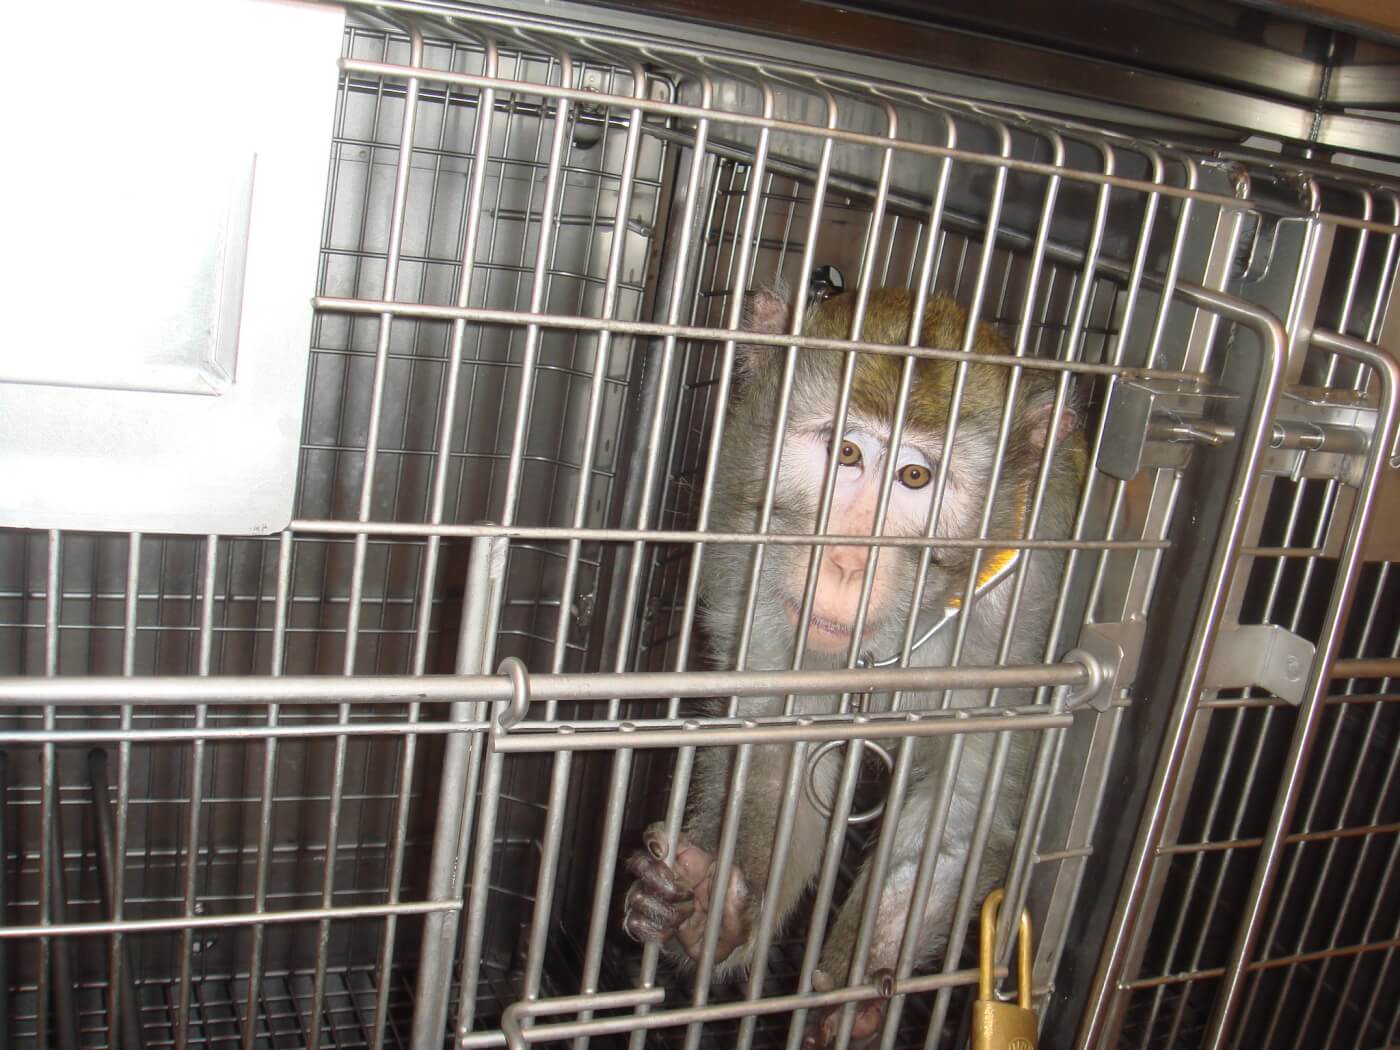 onprc 2008 peta investigation grantlab Violations of the Federal Animal Welfare Act in the Laboratories of Oregon Health & Science University